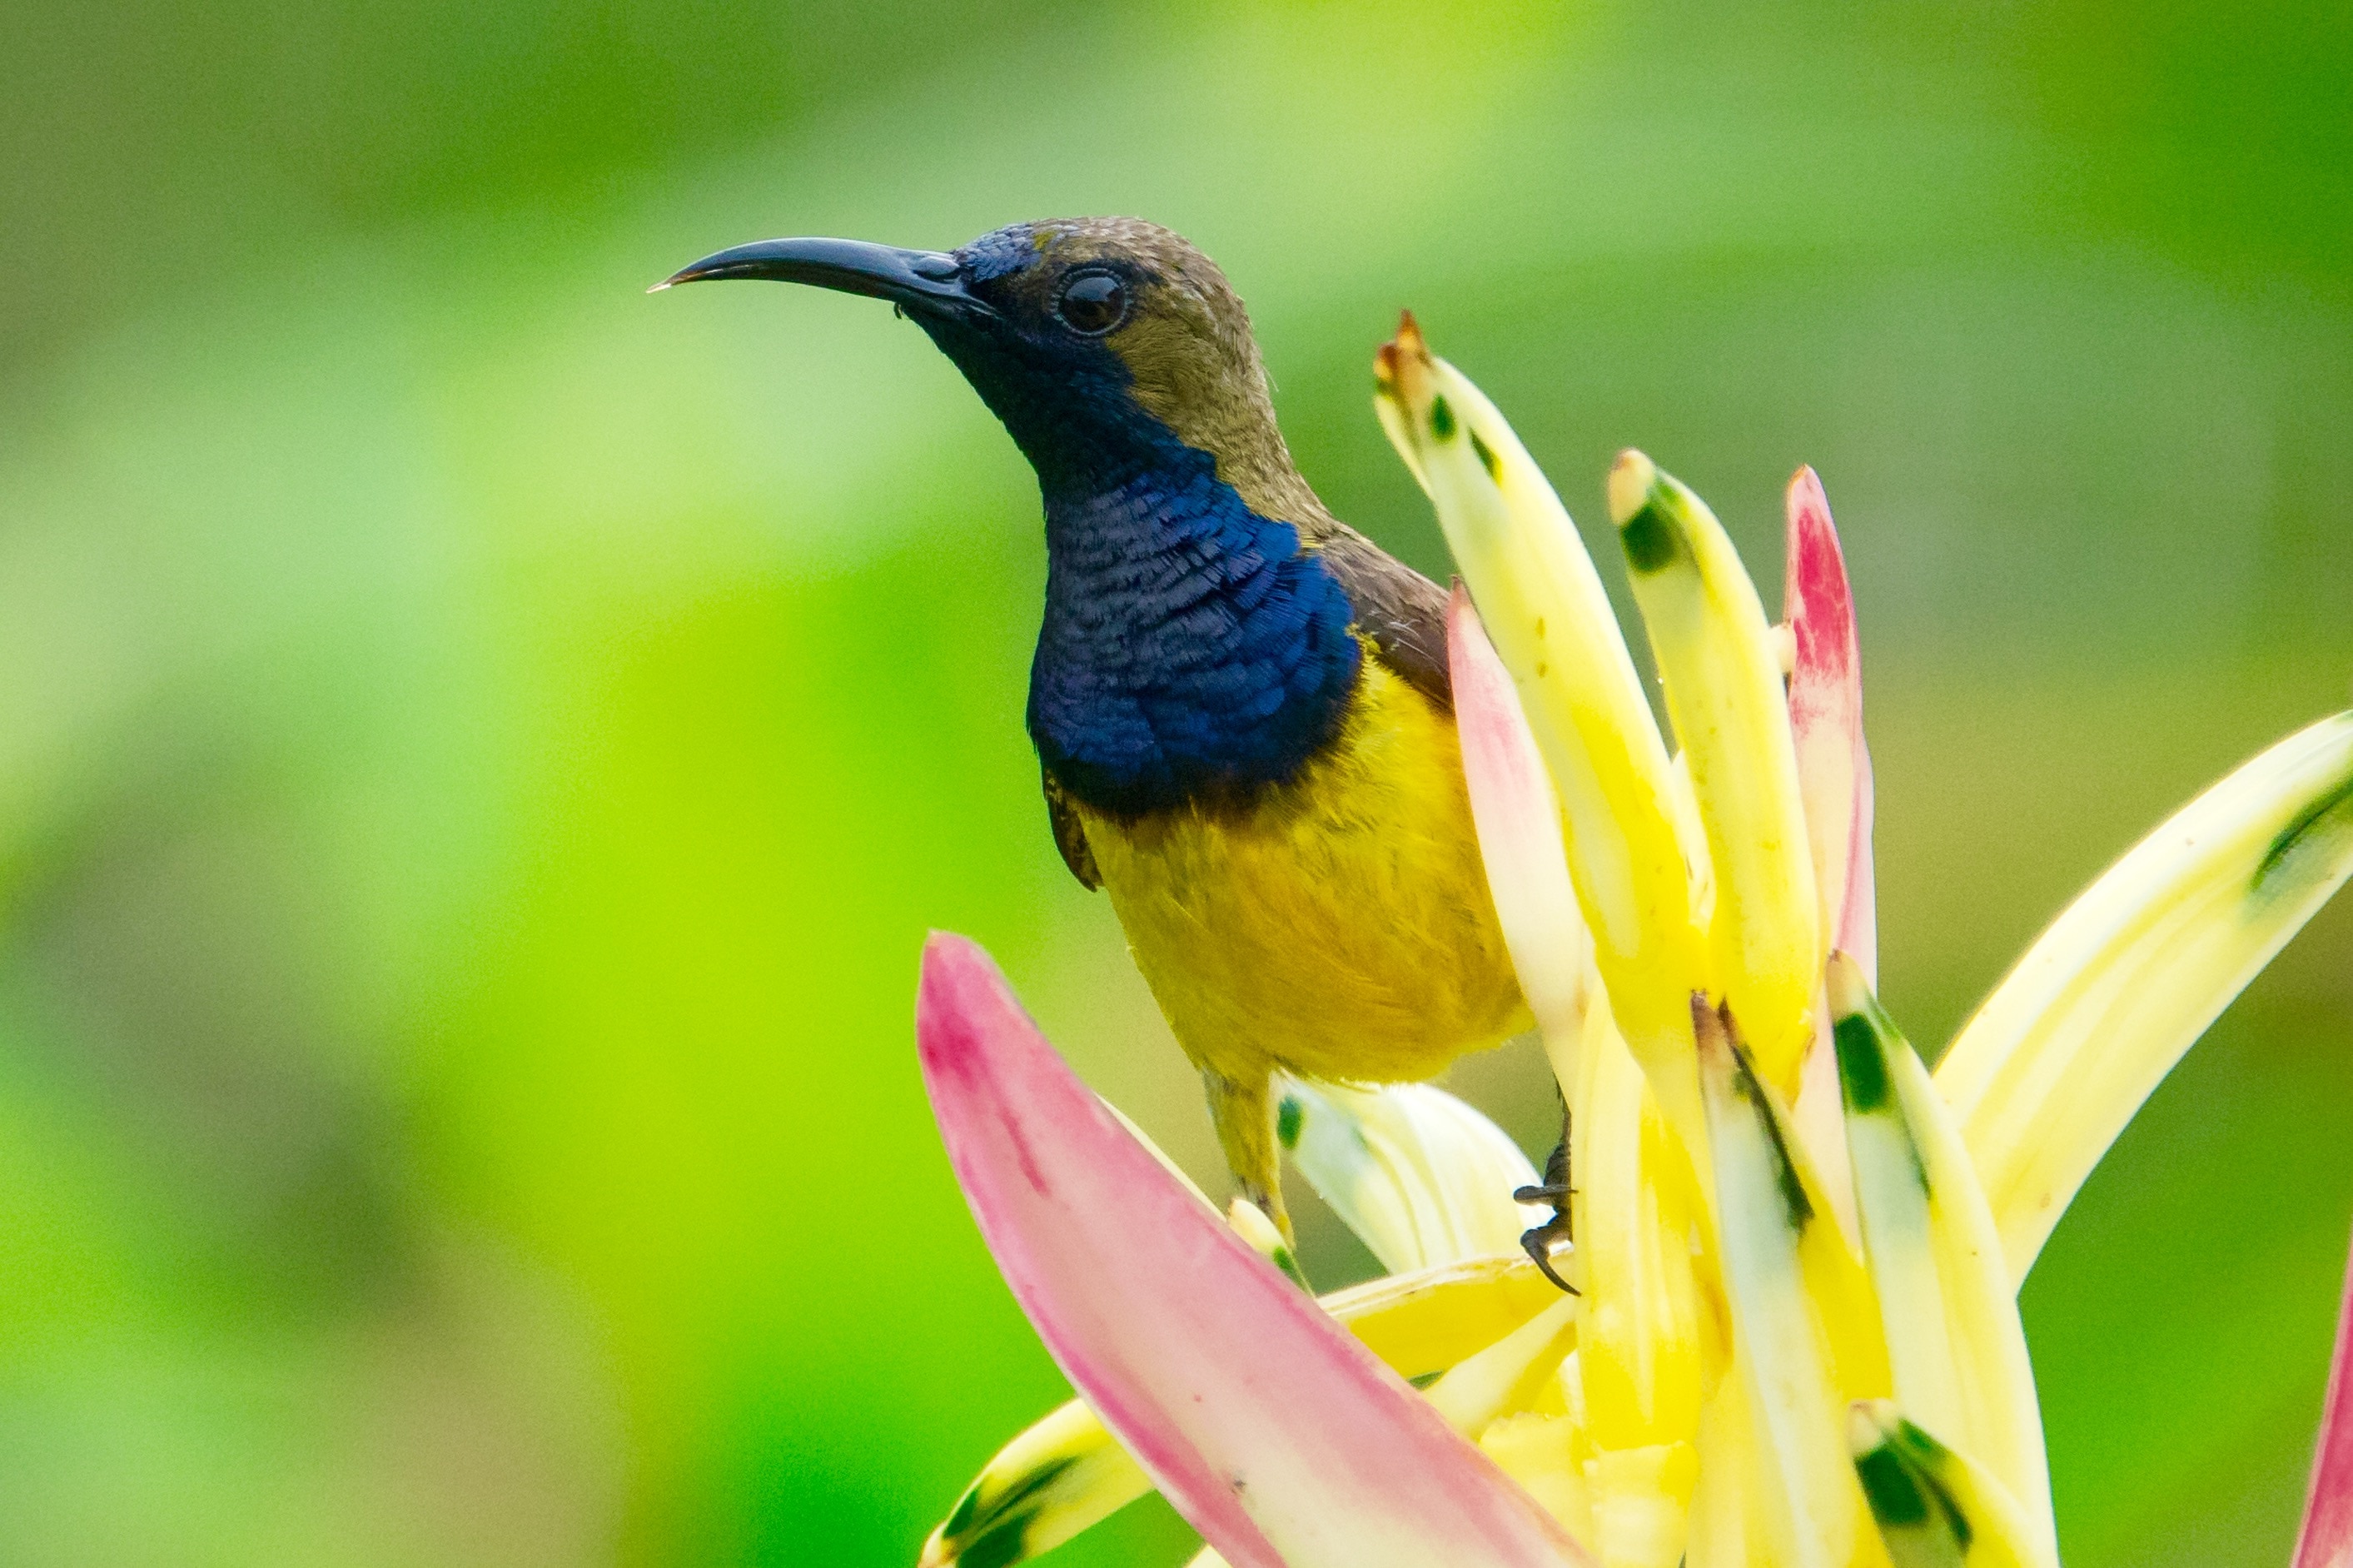 blue-yellow-brown bird with long beak on yellow petaled flower